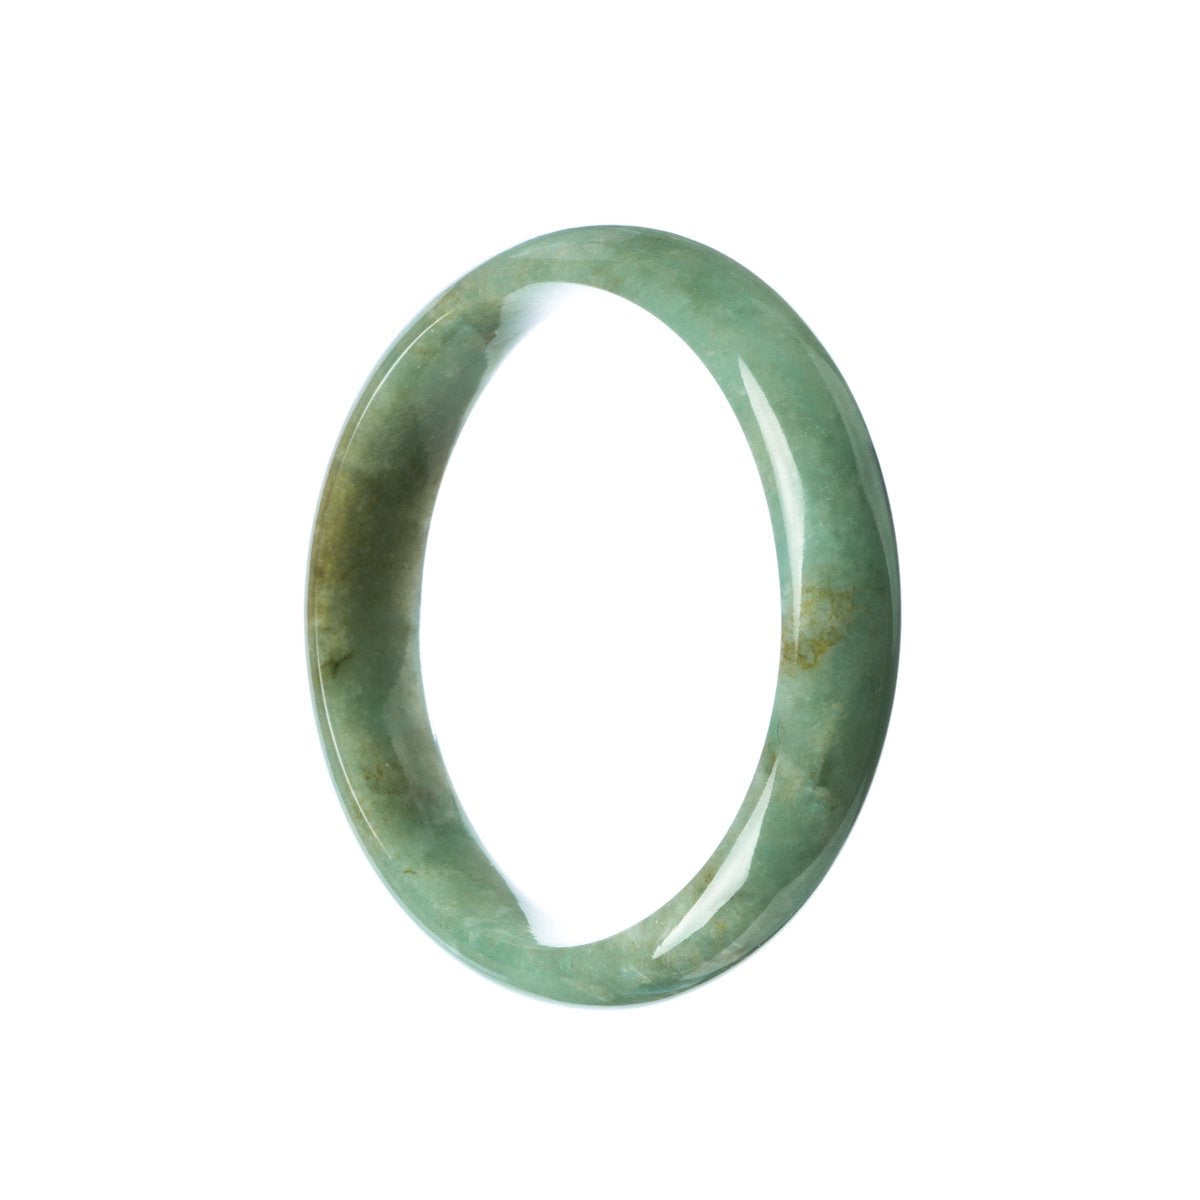 A beautiful half moon shaped green jade bangle made of genuine Grade A green jadeite jade, with a diameter of 57mm.